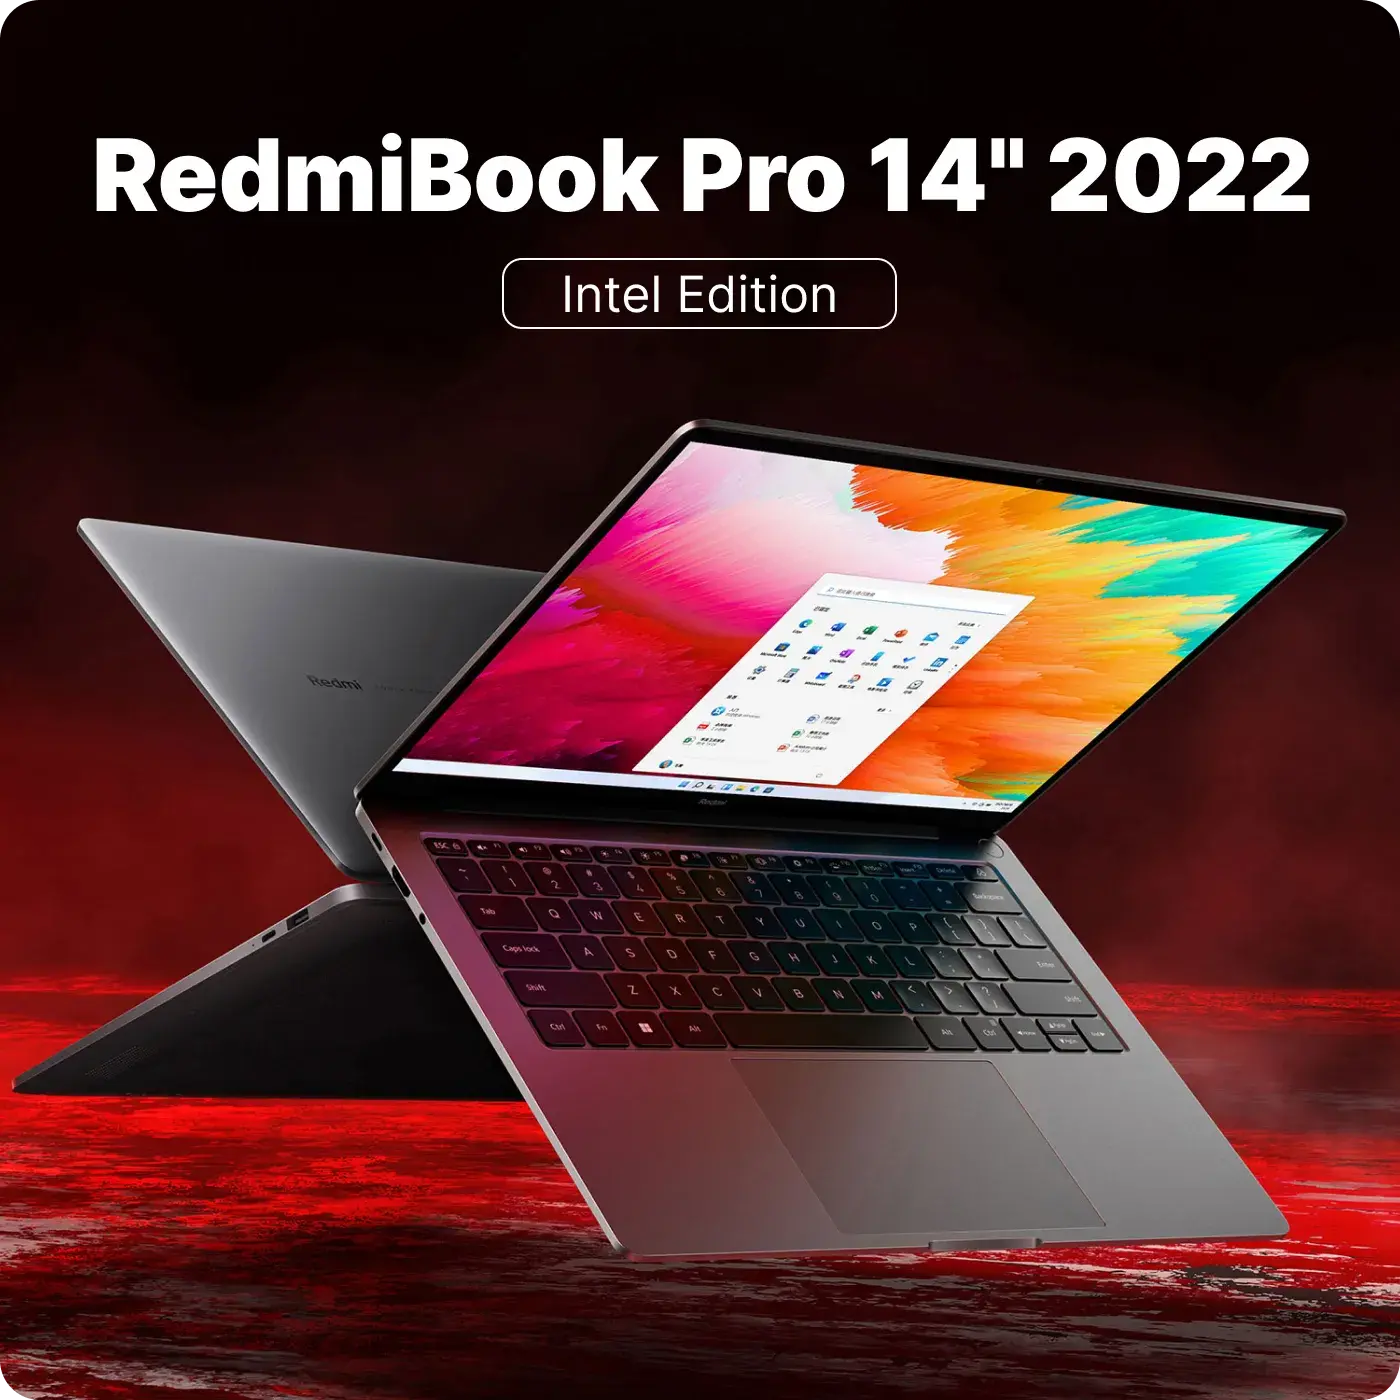 RedmiBook Pro 14" 2022